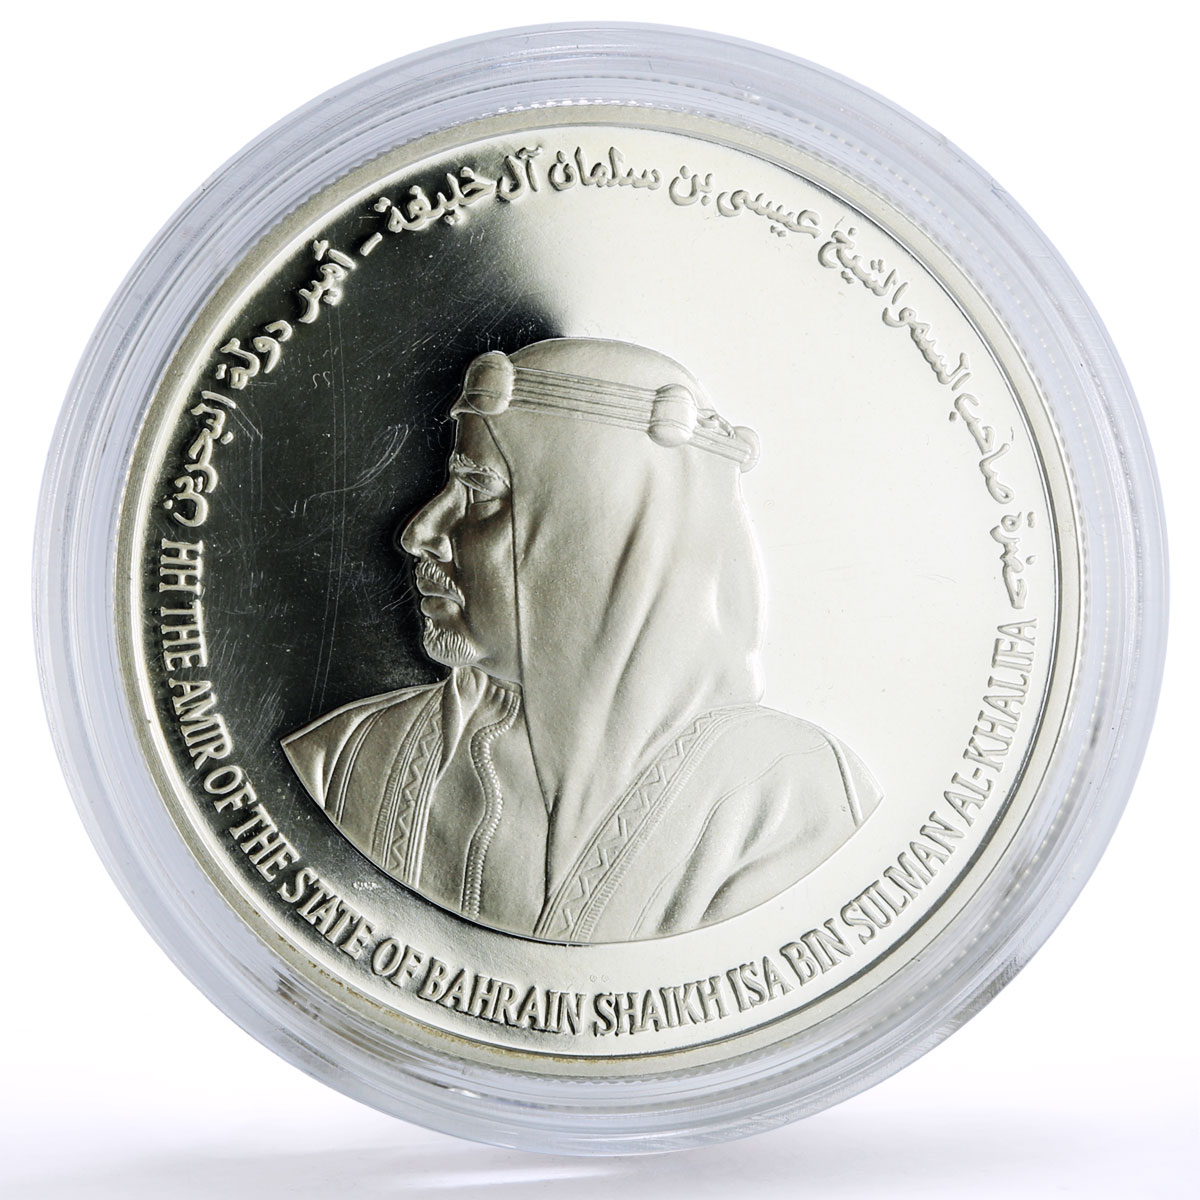 Bahrain 5 dinars United Nations UN 50th Anniversary proof silver coin 1995